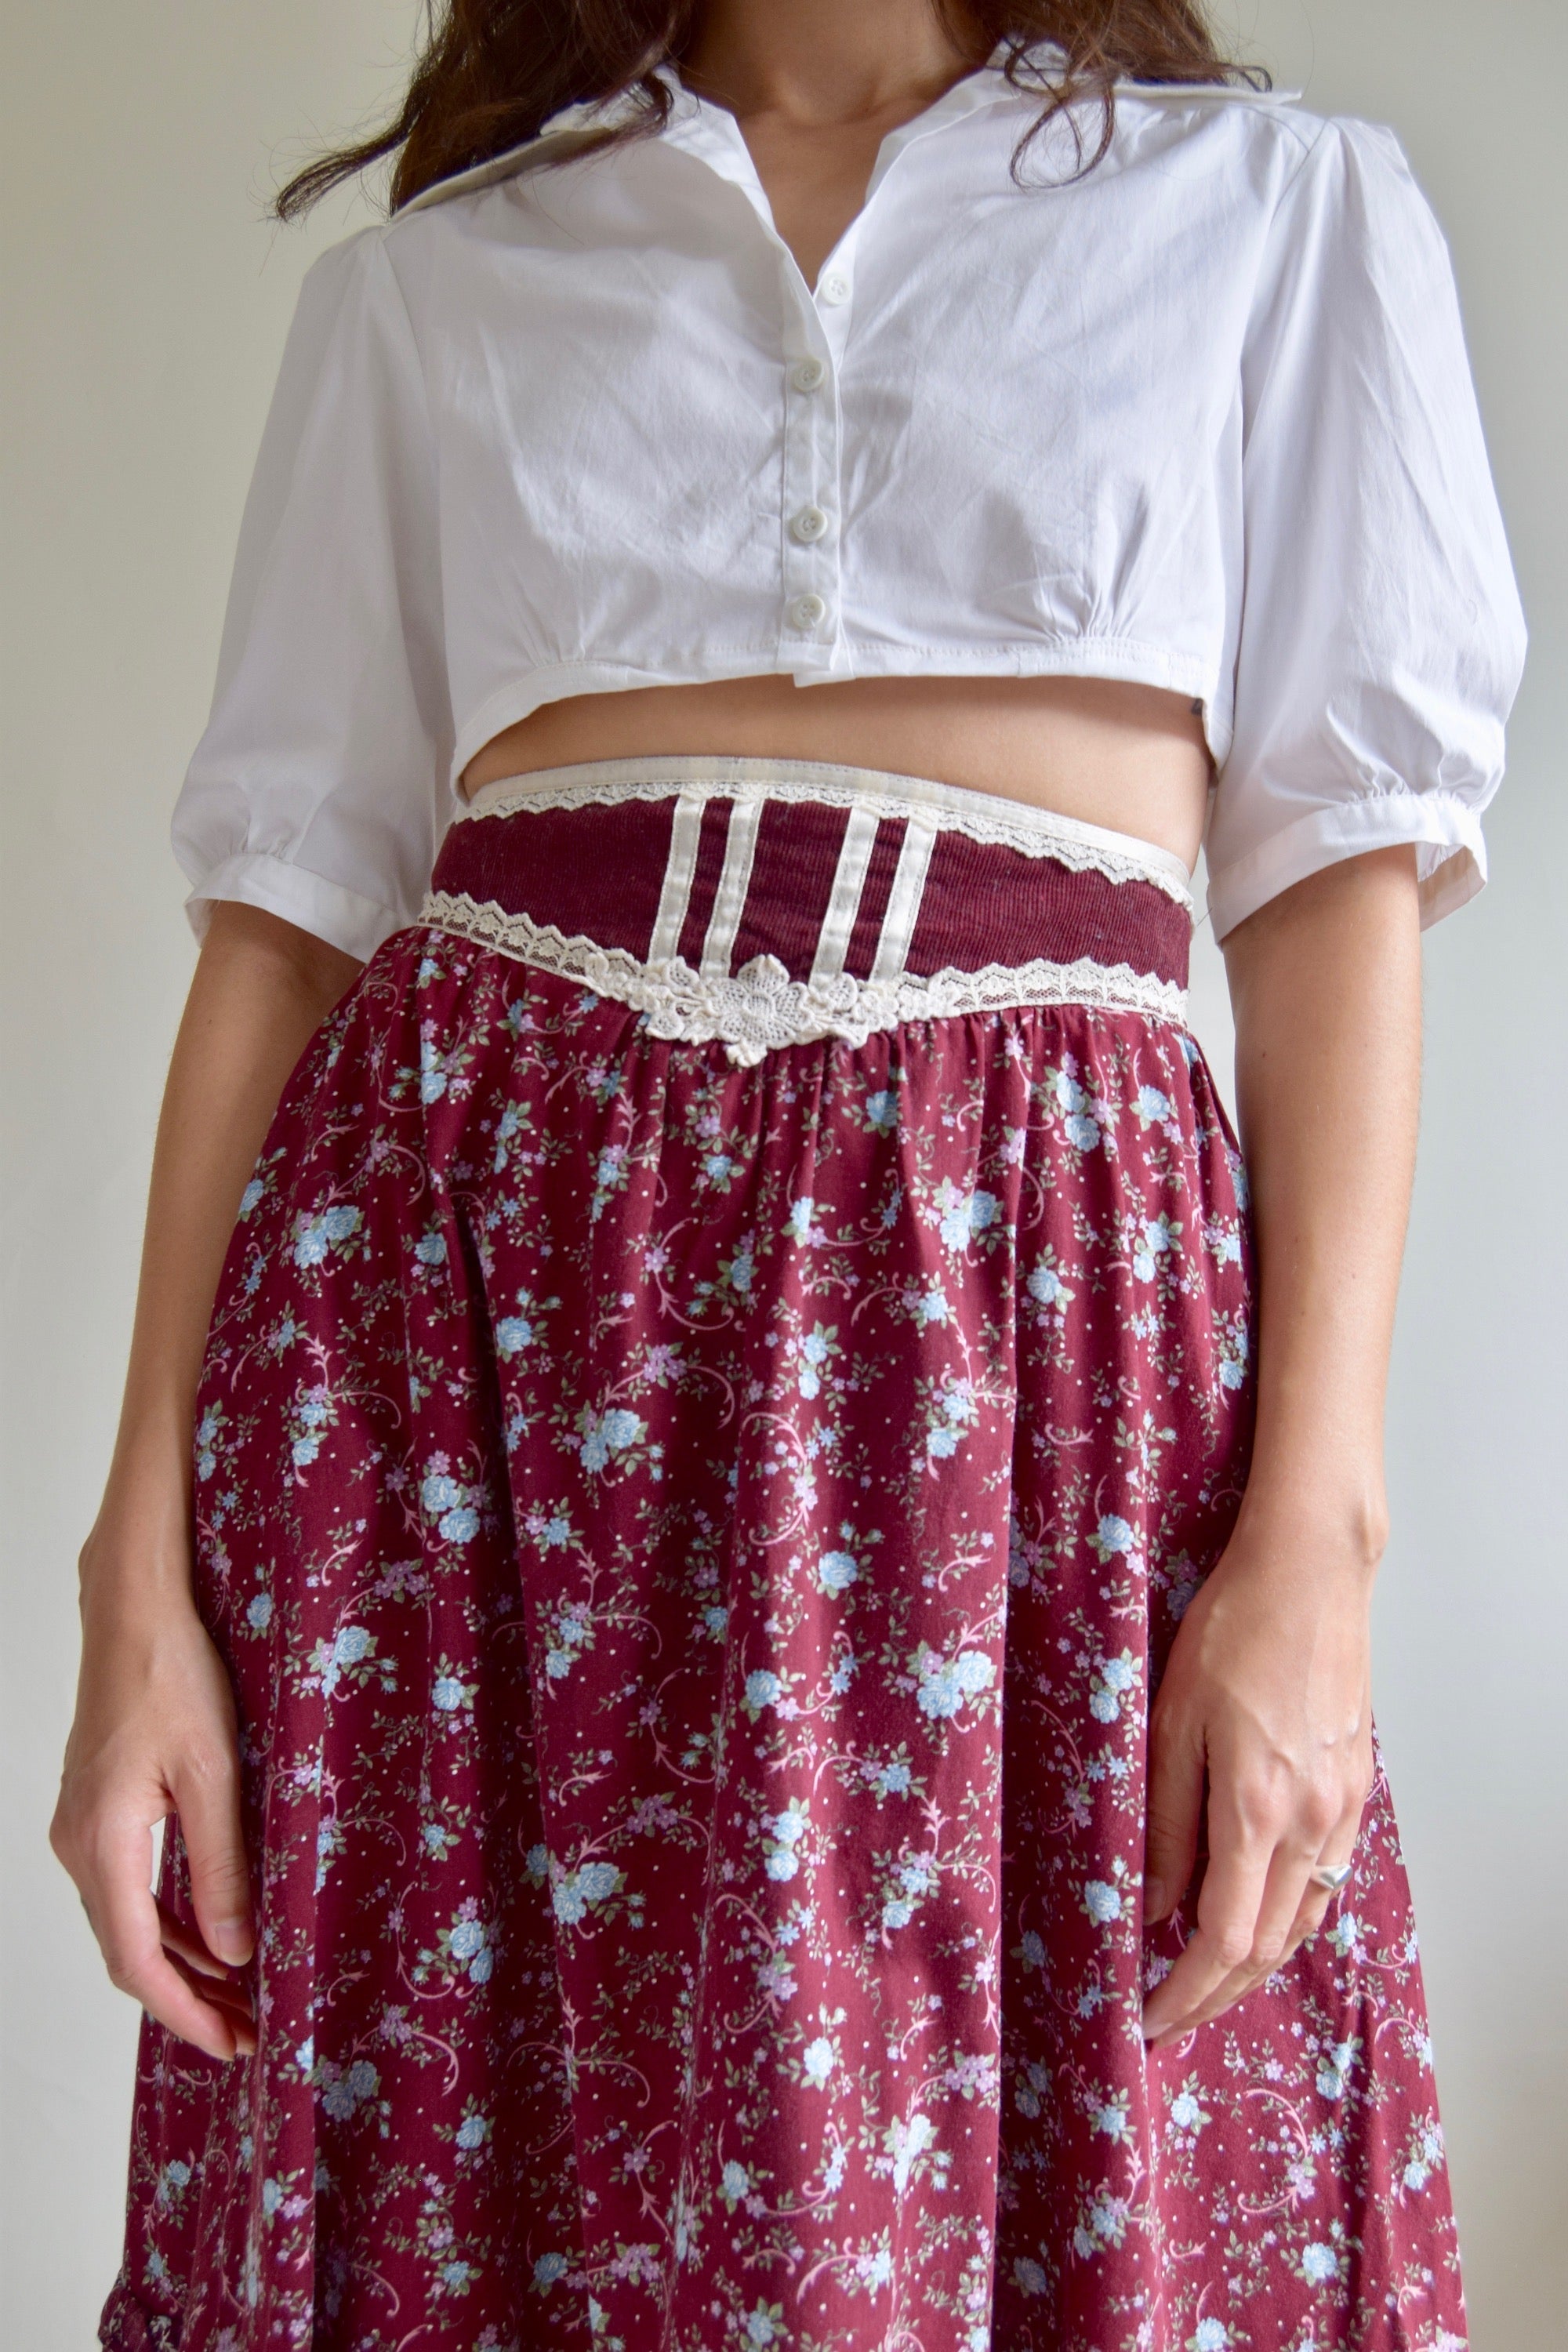 Vintage 1970's Ruffled Gunne Sax Floral Wine Skirt